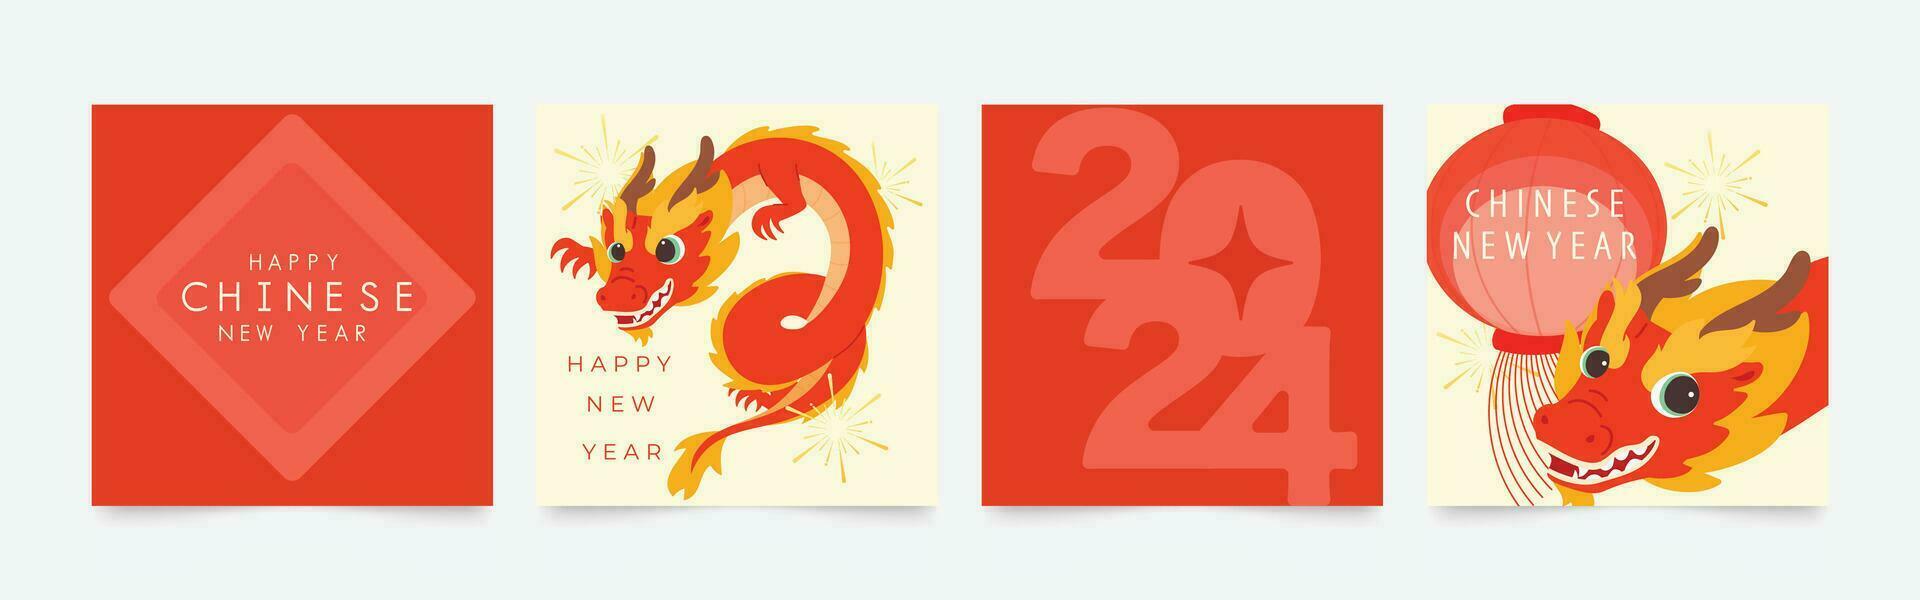 kinesisk ny år fyrkant omslag bakgrund vektor. år av de drake design med drake, lykta, fyrverkeri. modern orientalisk illustration för omslag, baner, hemsida, social media. vektor